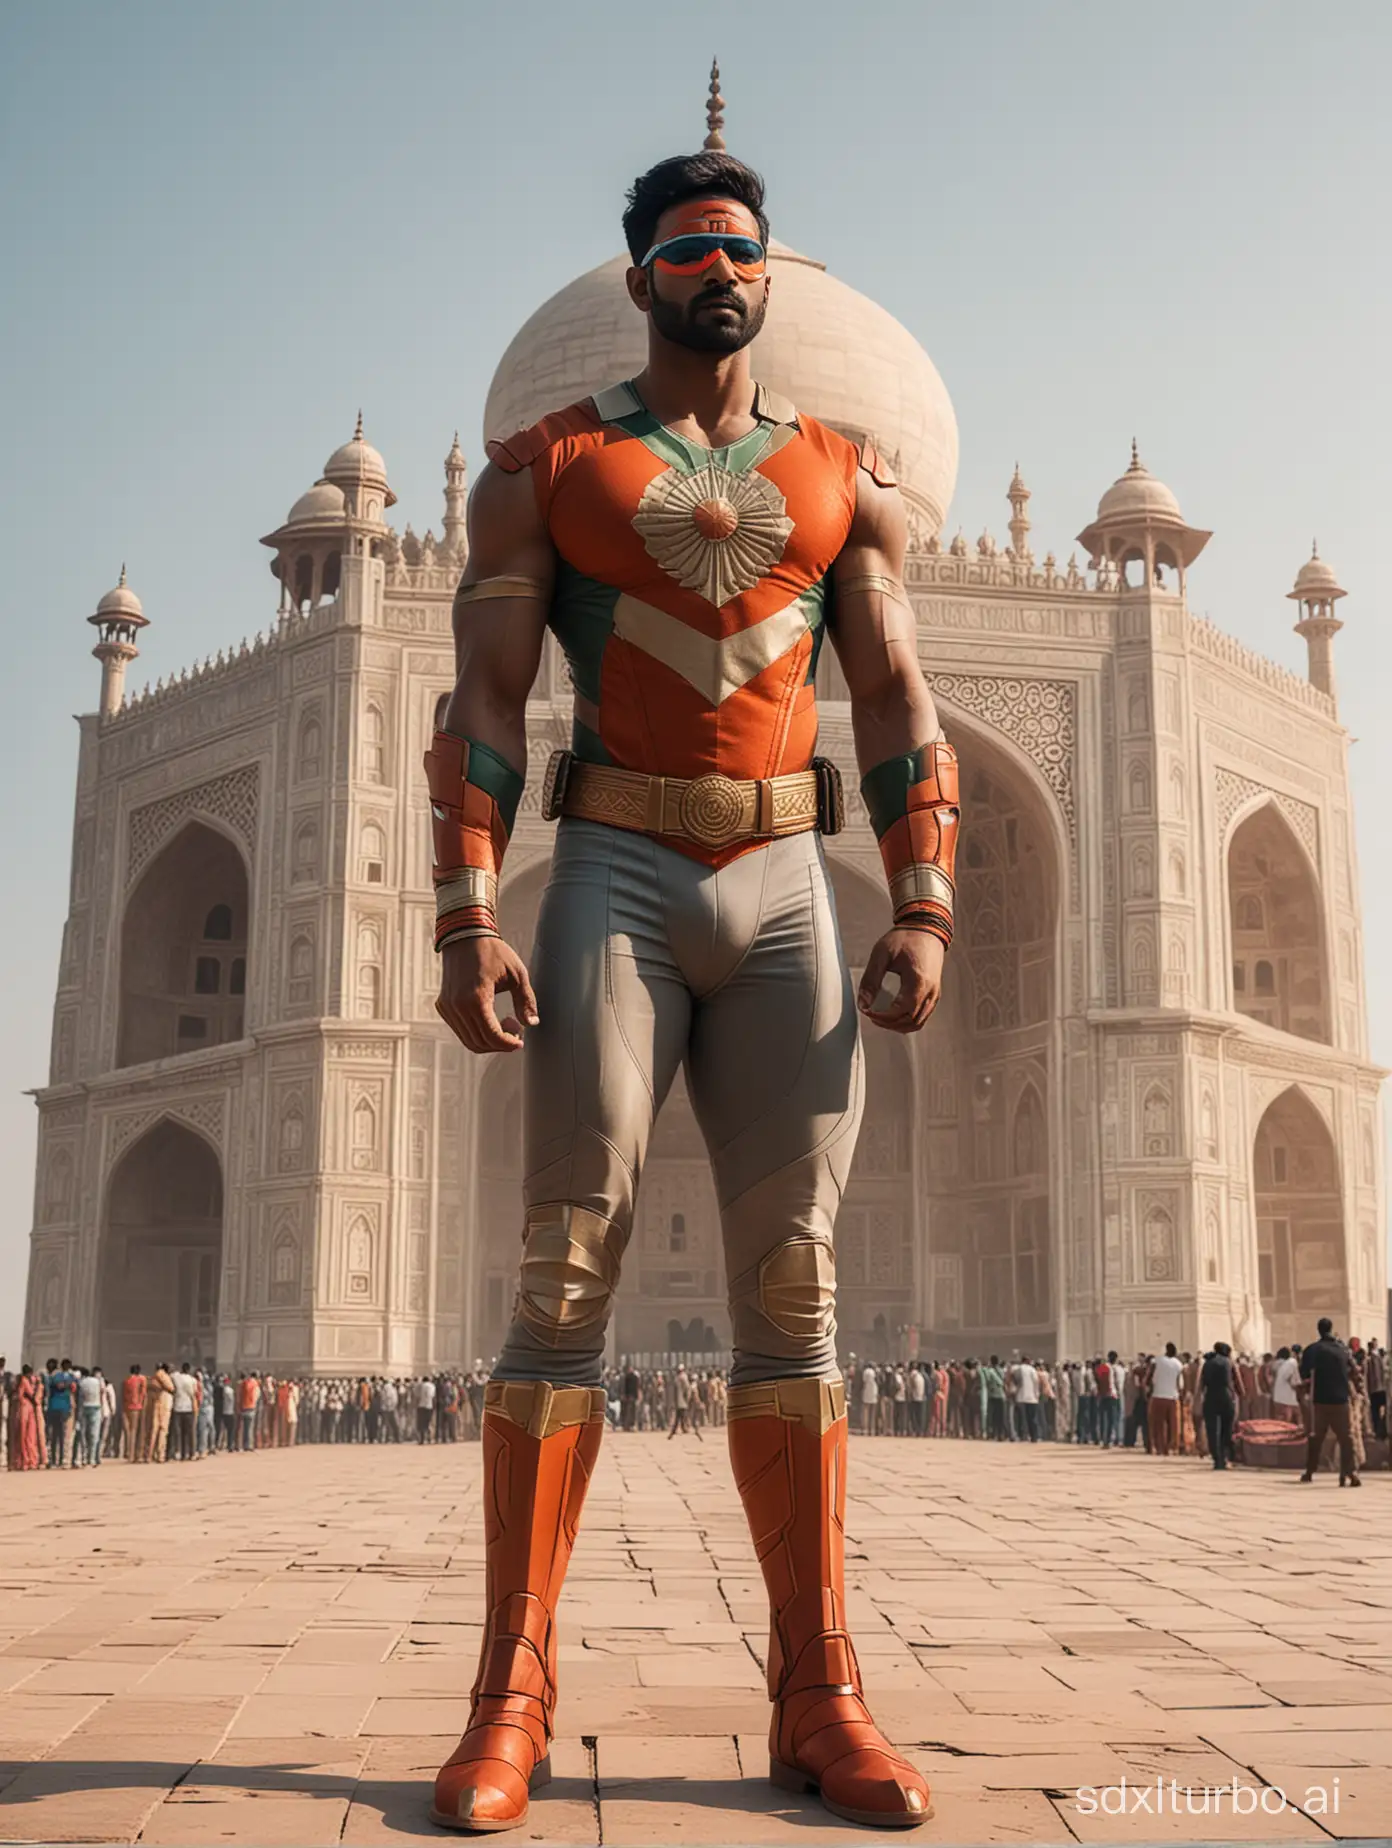 A futuristic Indian superhero with a costume based on Indian flag colors standing near the Taj Mahal